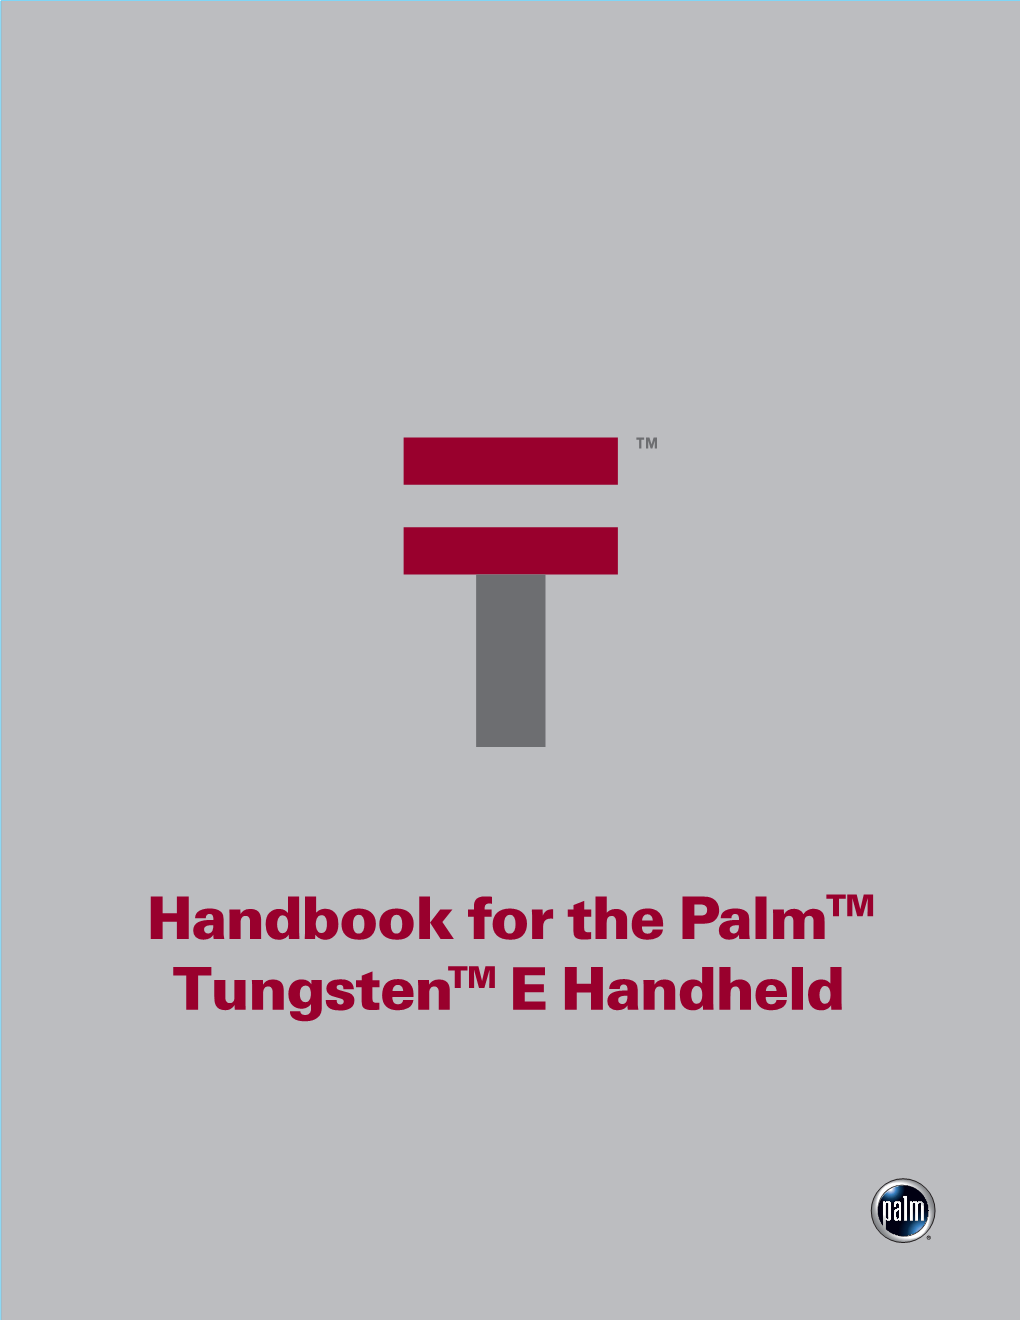 Handbook for the Palm Tungsten E Handheld